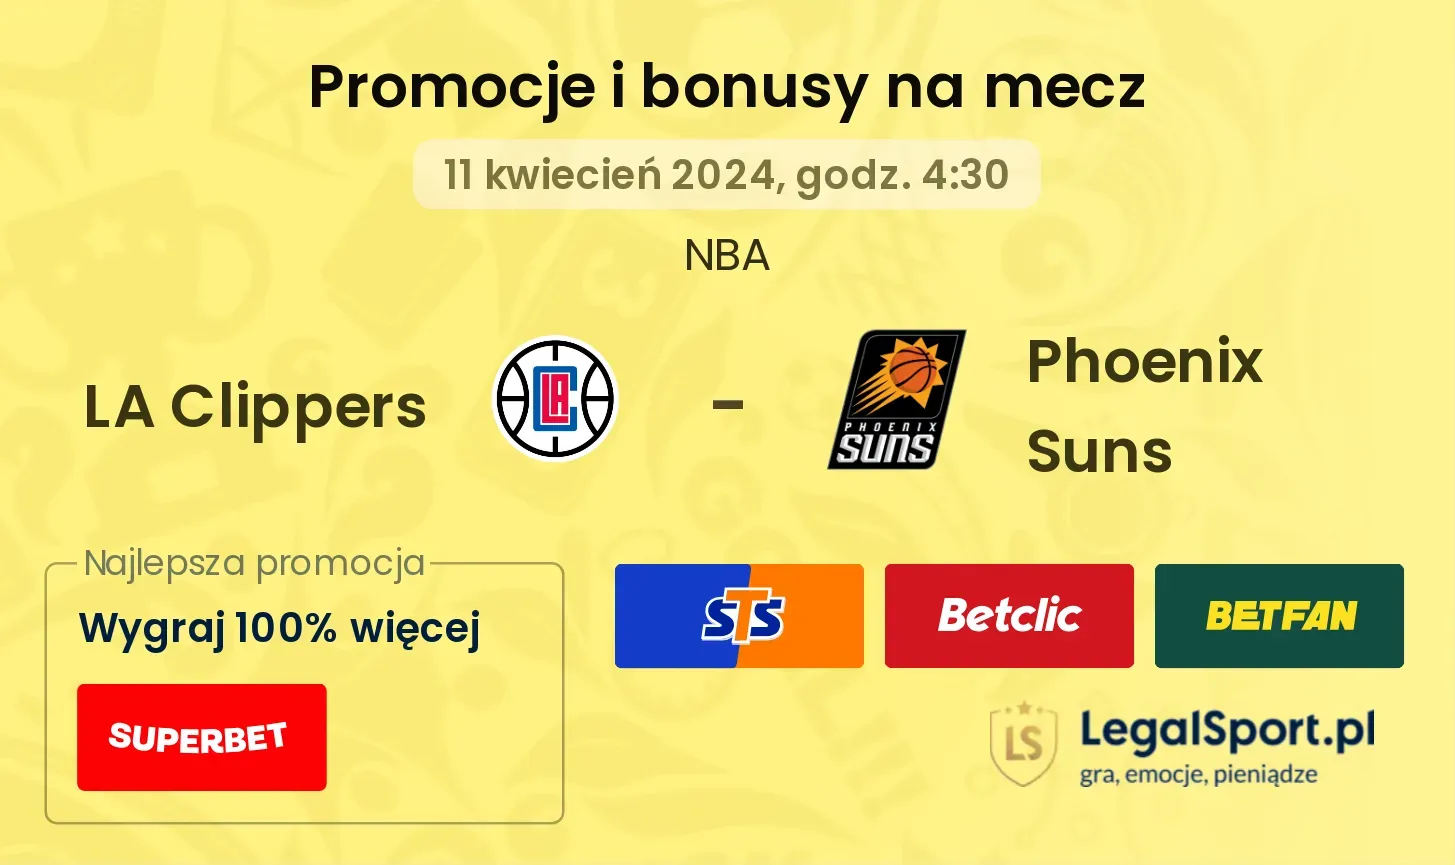 LA Clippers - Phoenix Suns promocje bonusy na mecz